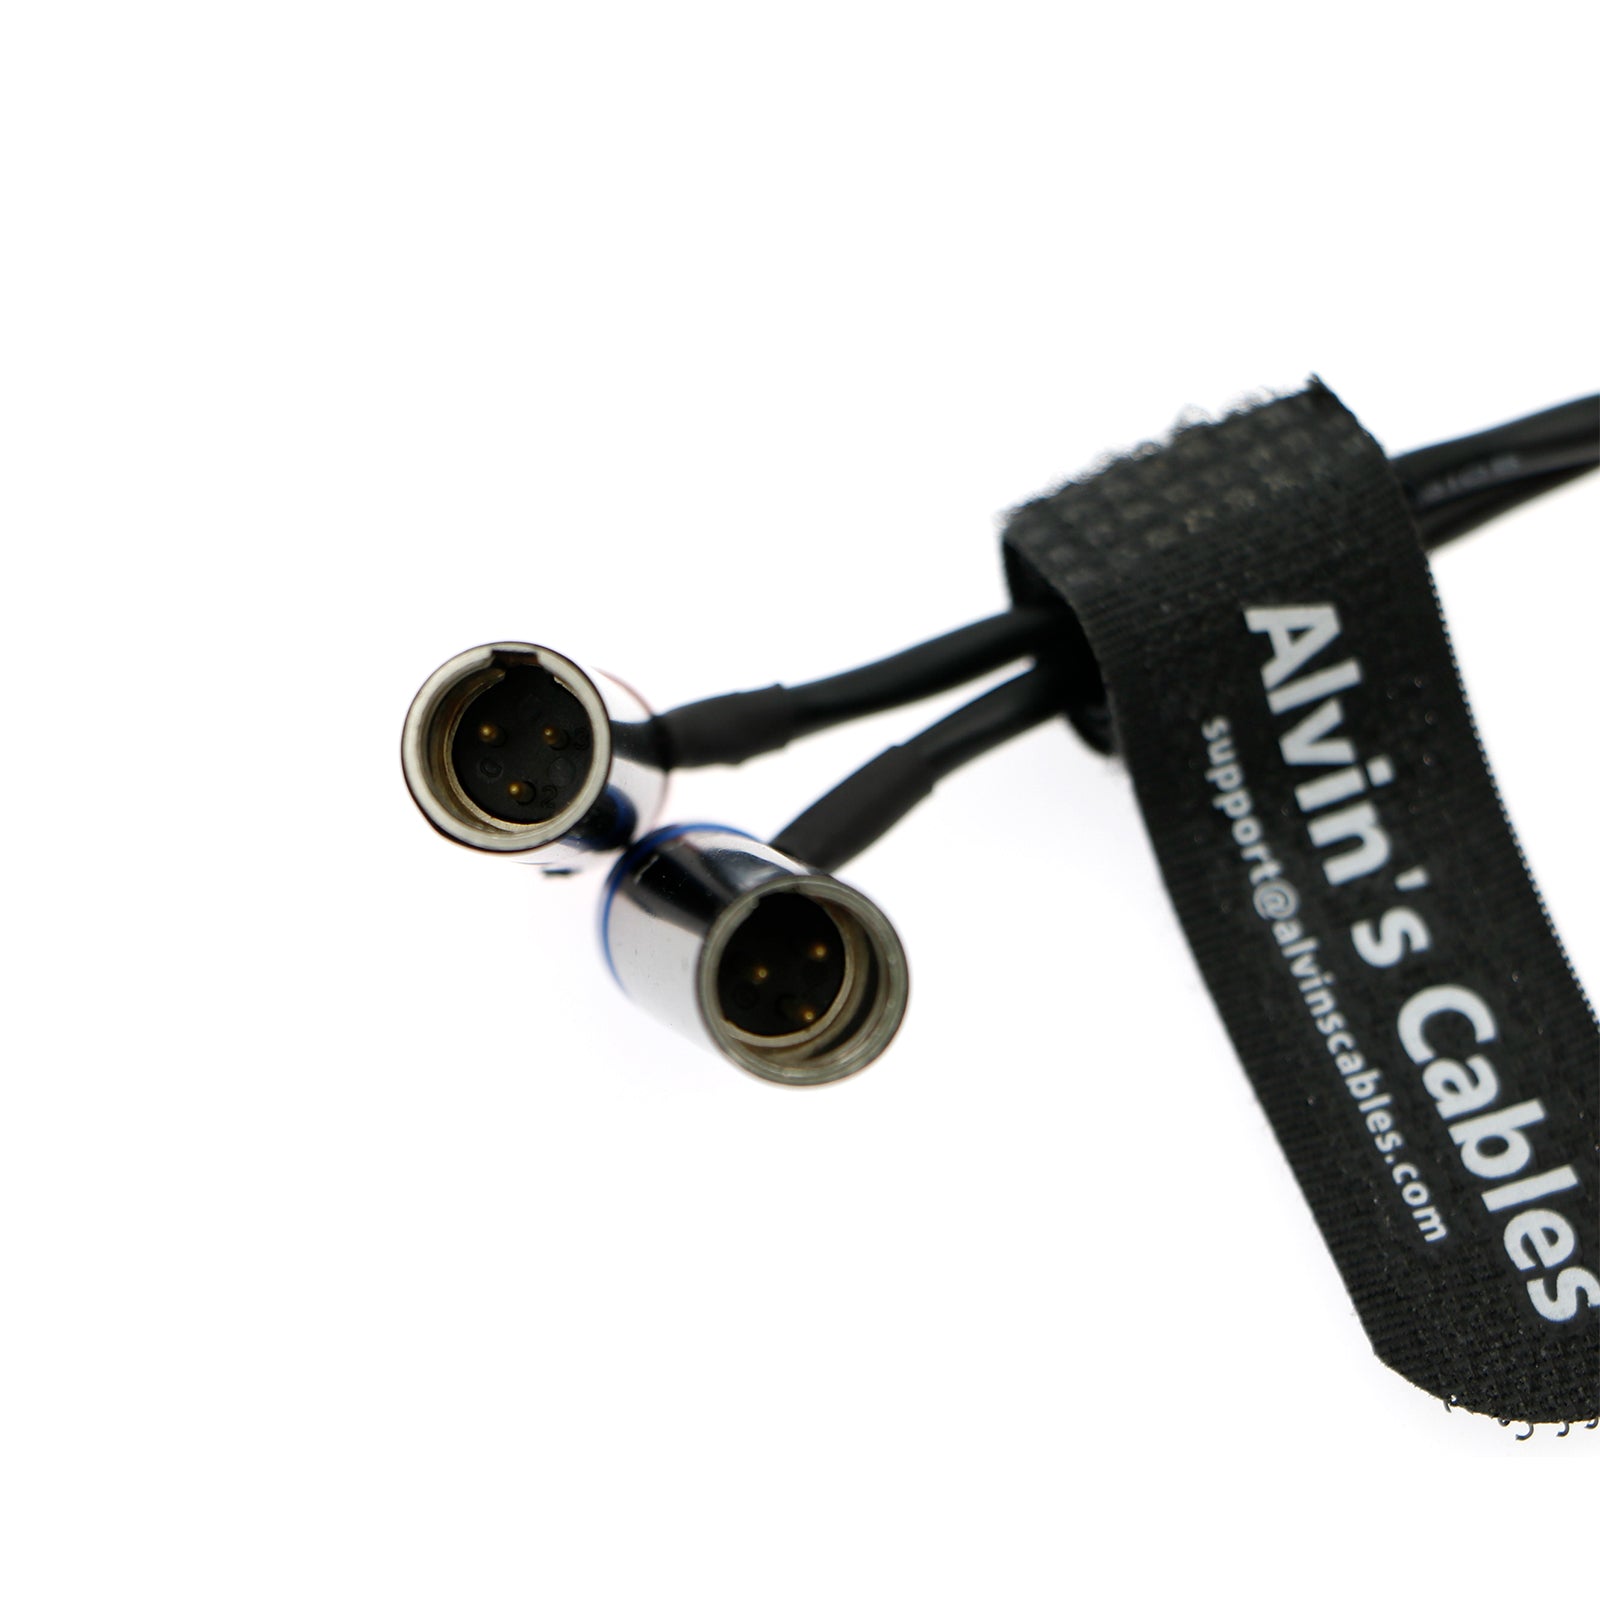 Alvin’s Cables Low-Profile TA5F to Dual TA3M Audio-Cable for Wisycom-MCR54| Lectrosonics-DCHR-Receiver LP Mini-XLR-5 Pin Female to Two LP Mini-XLR-3 Pin Male Splitter Cable for Canon-C70 Camera